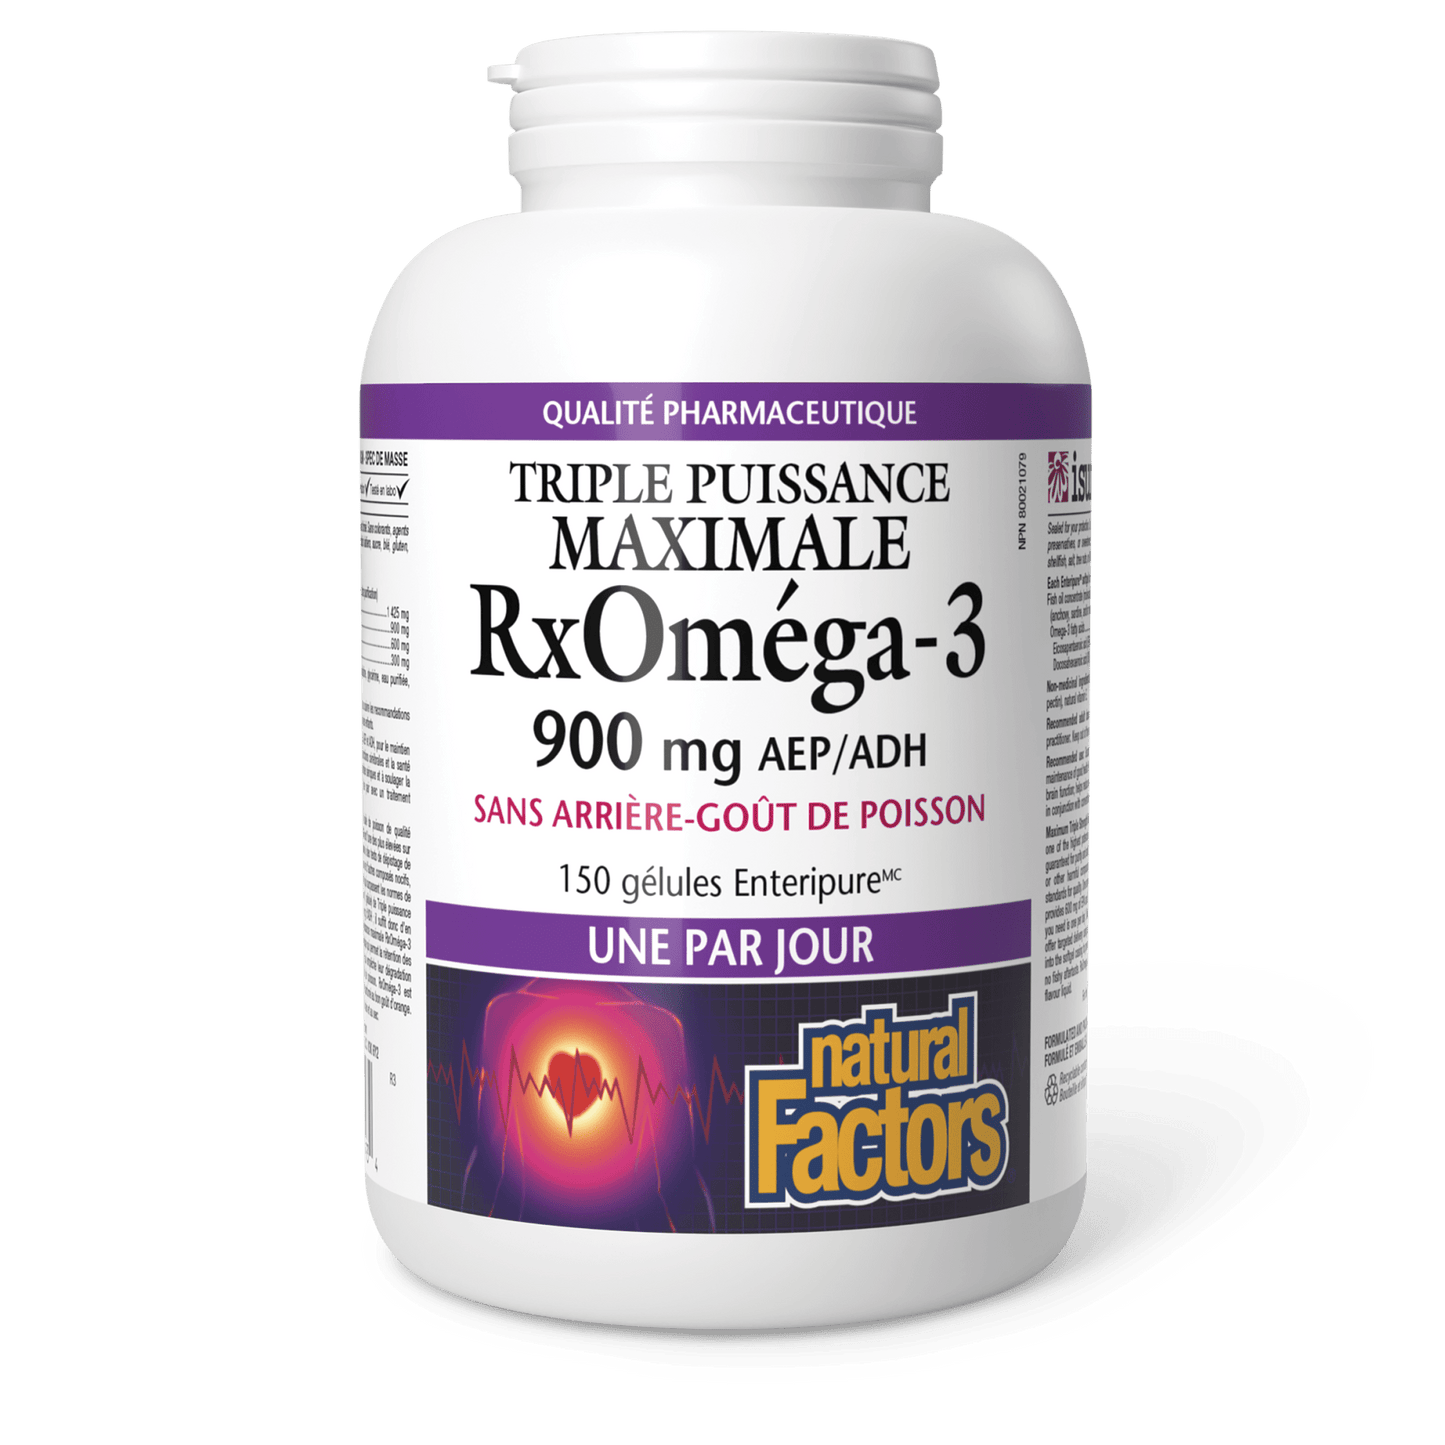 RxOméga-3 Triple puissance maximale 900 mg, Natural Factors|v|image|35493